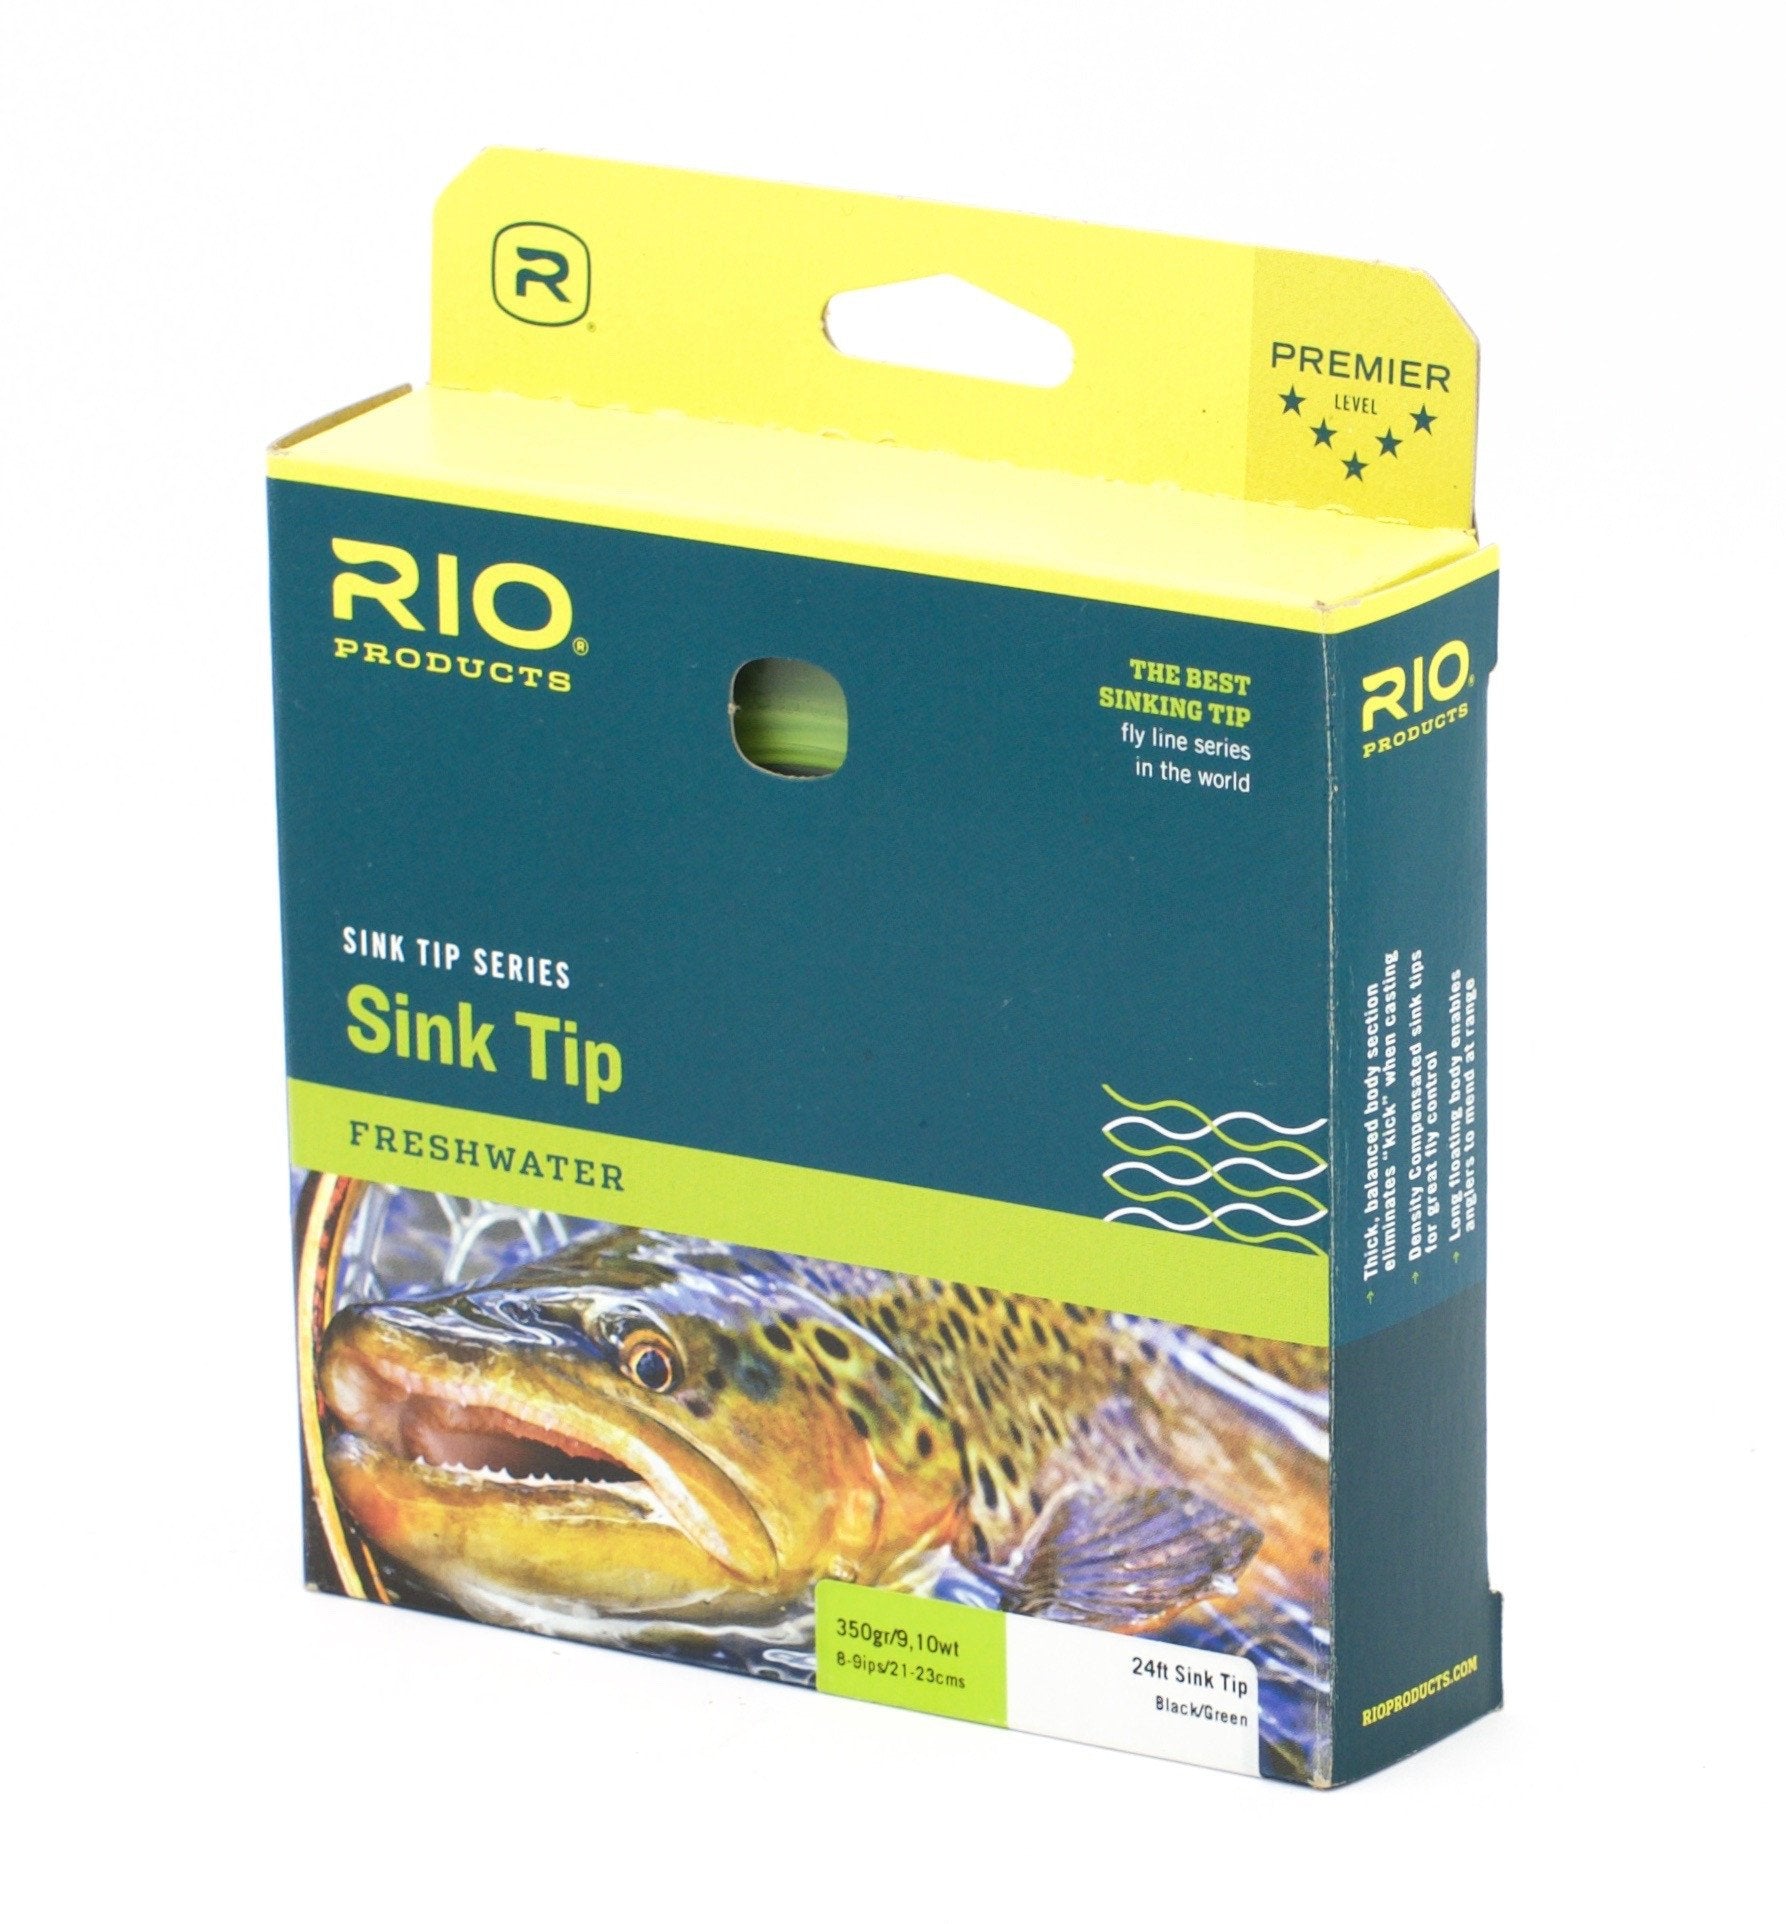 Rio - Sink Tip 350gr/9-10wt Freshwater Fly Line